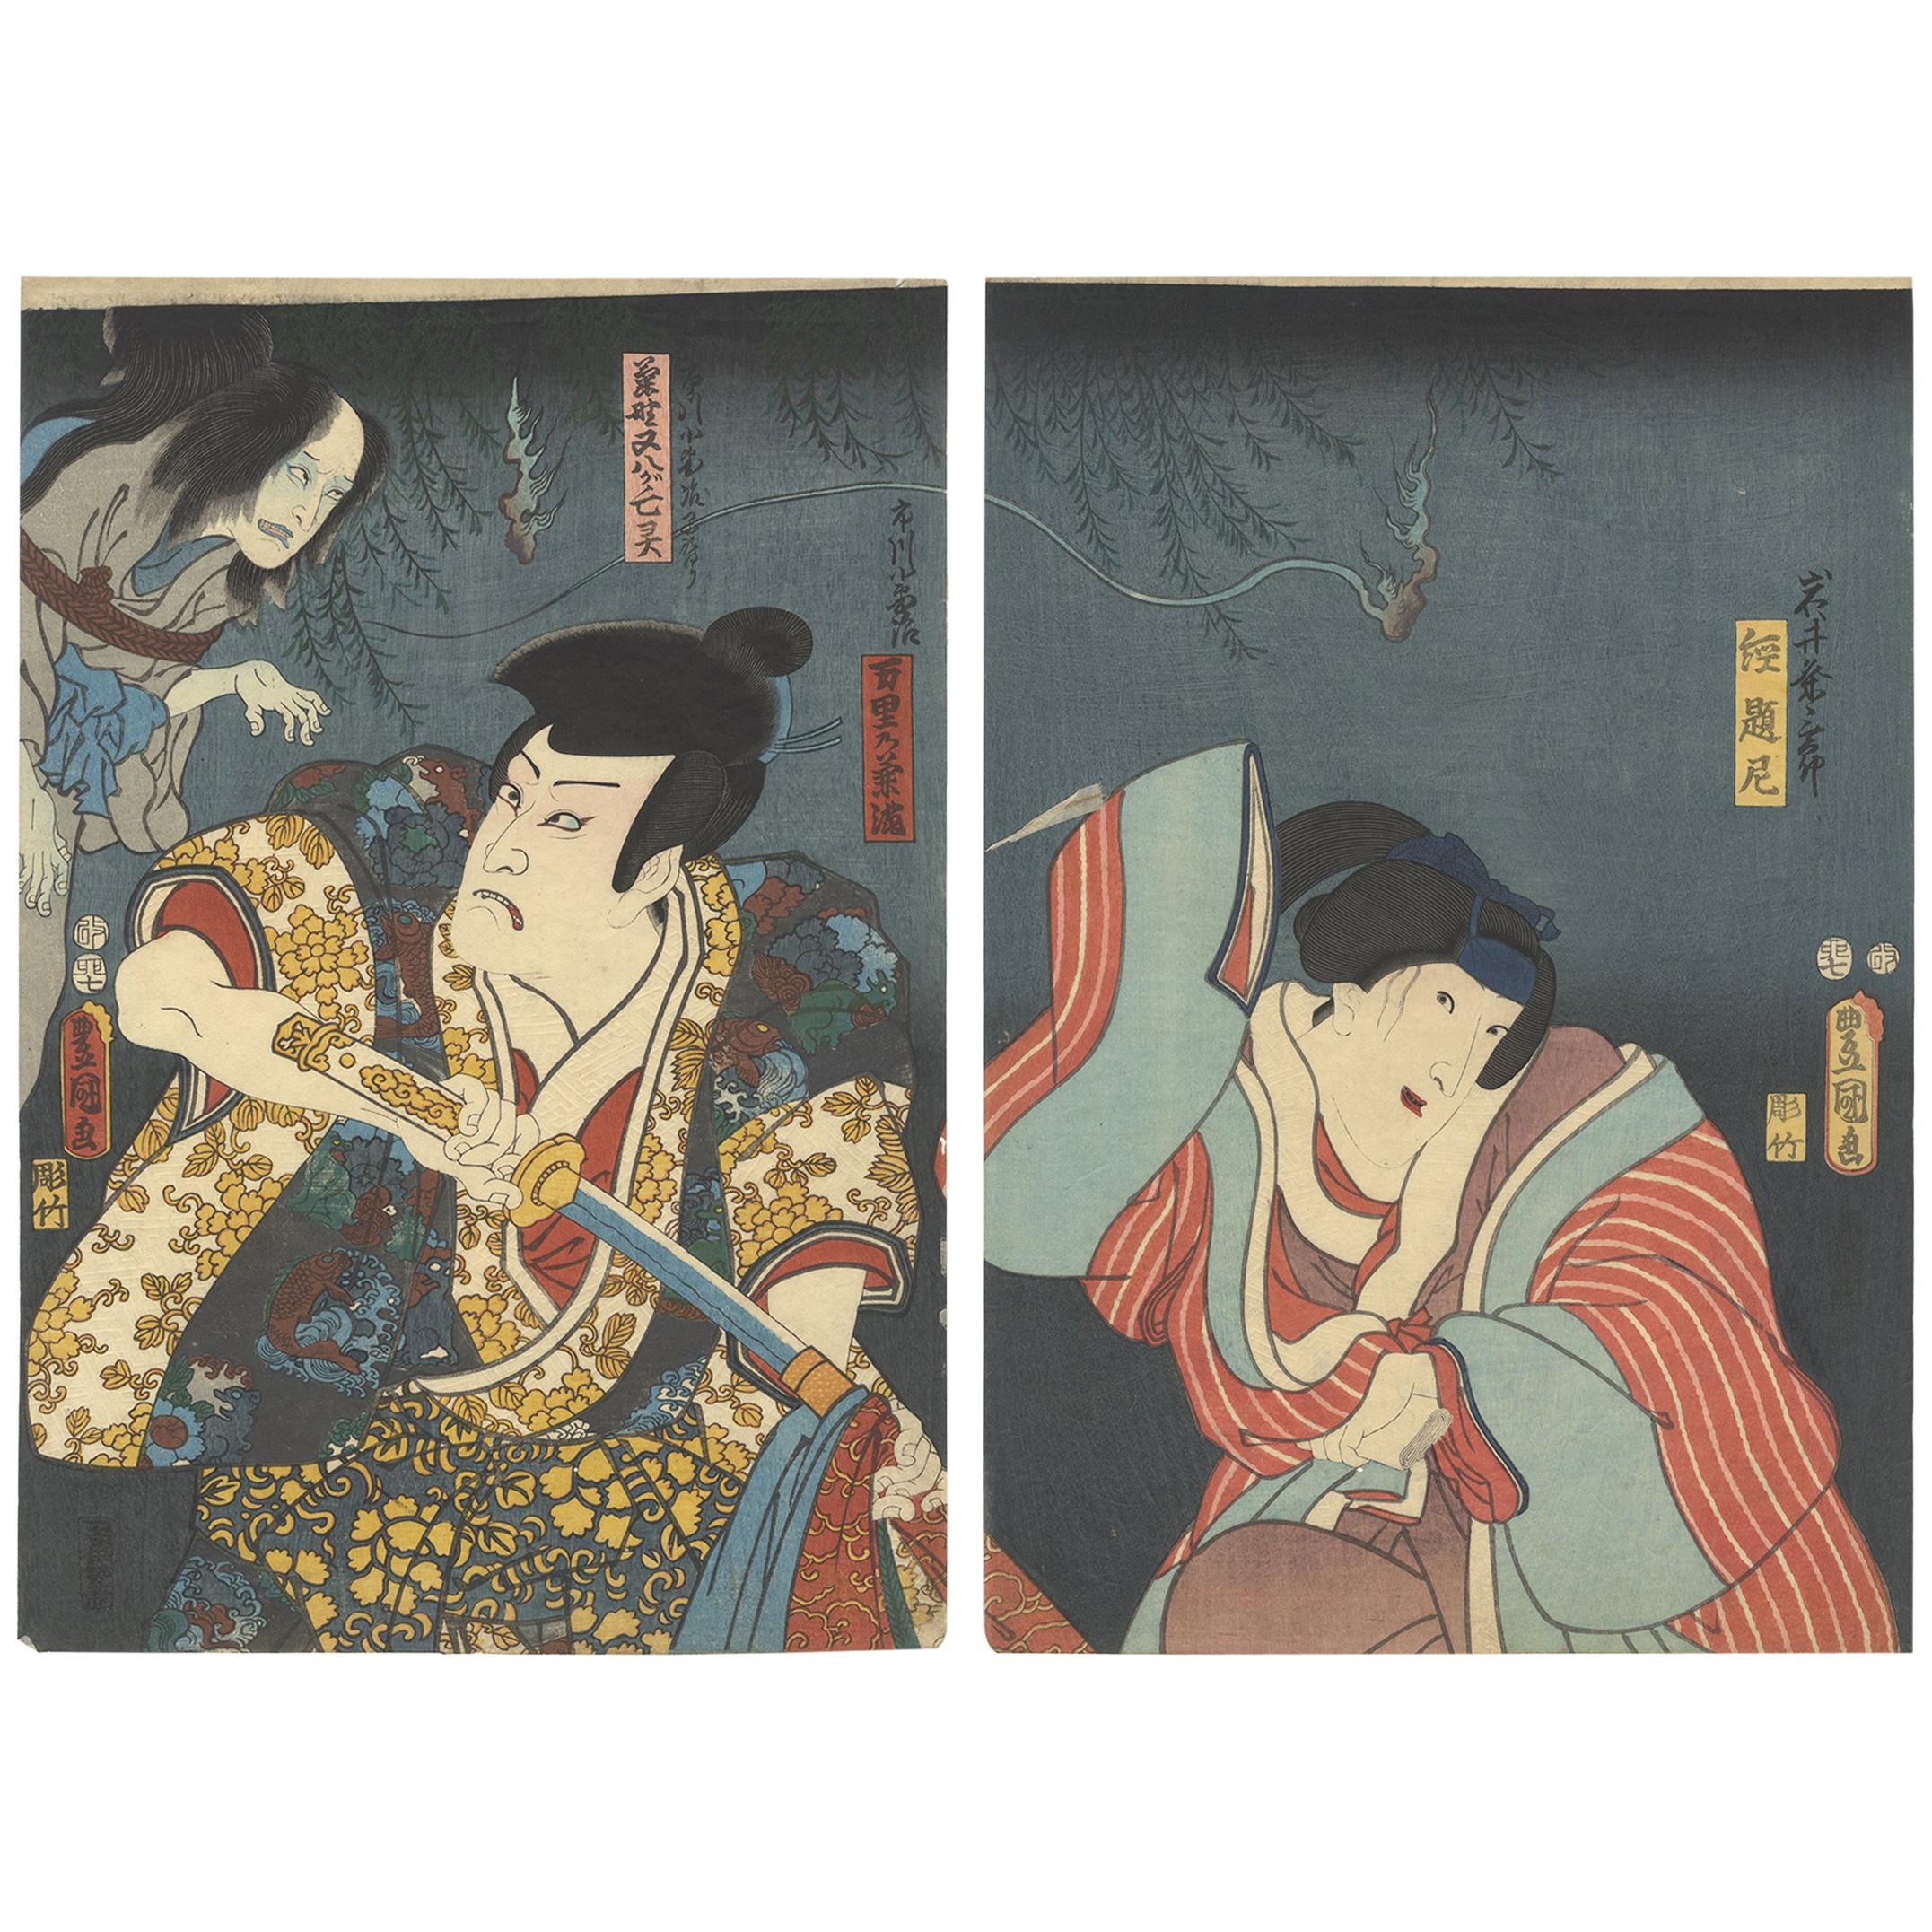 Utagawa Toyokuni Diptych Japanese Woodblock Print Ukiyo-e, Tragic Love Story For Sale